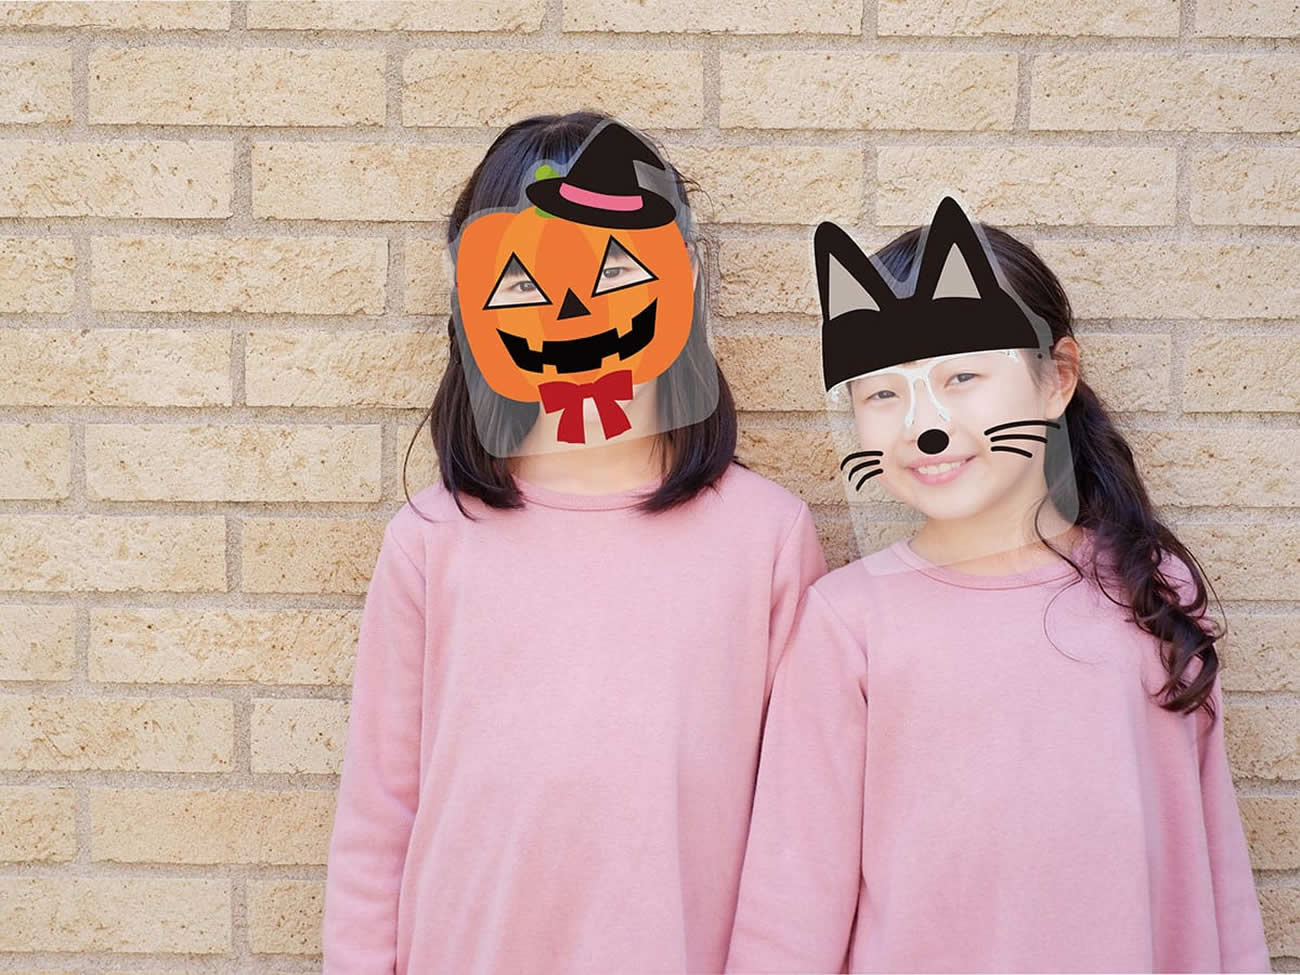 Empresa torna máscaras de proteção contra pandemia aptas para o Halloween